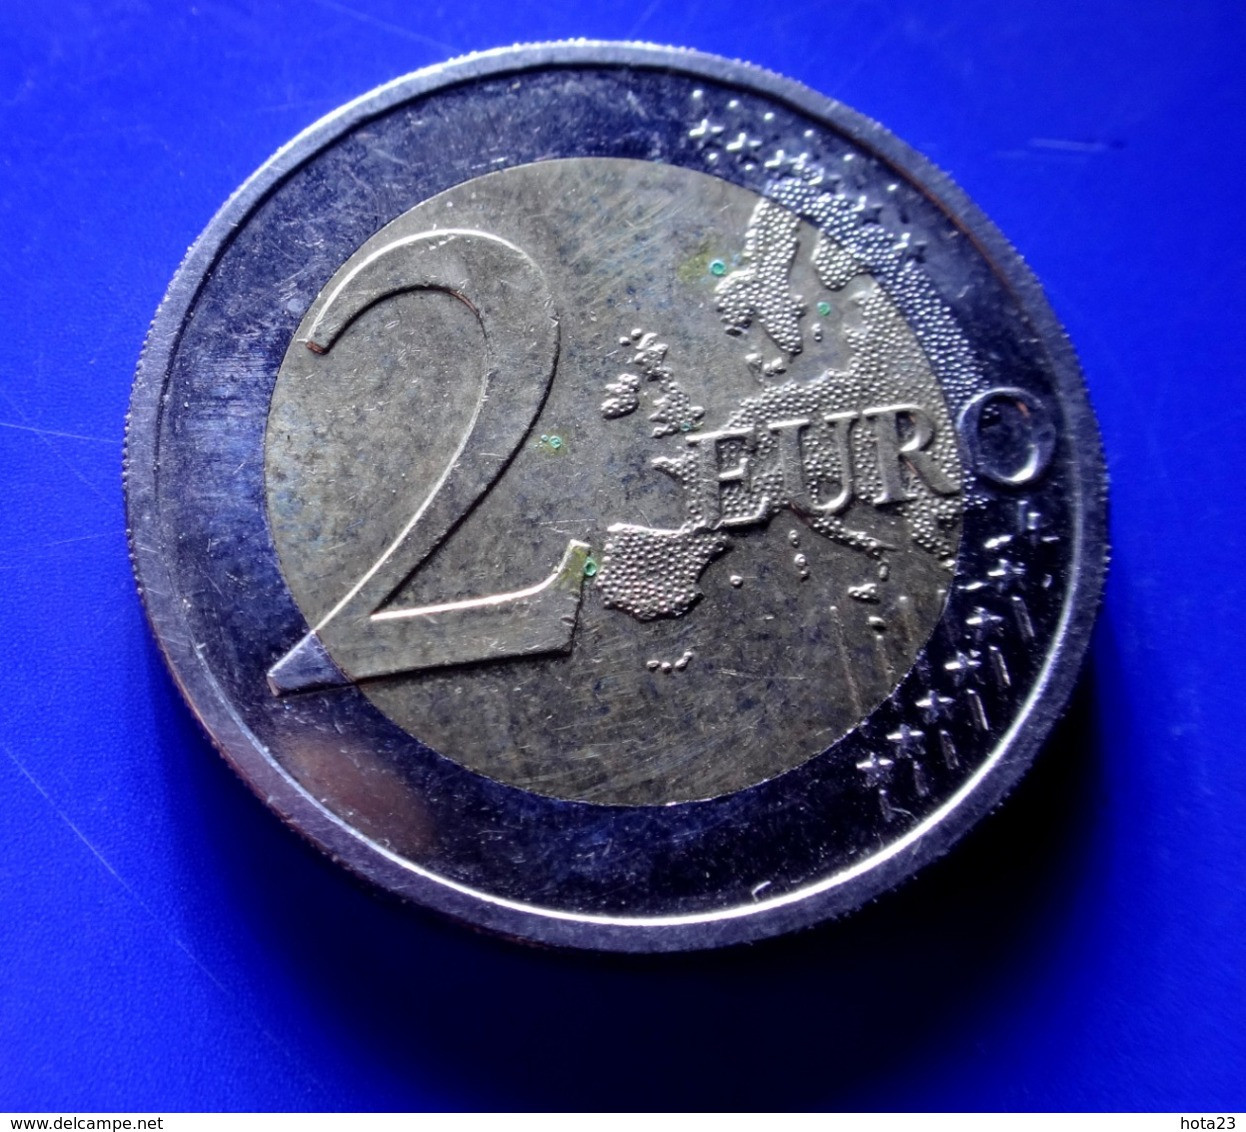 (!)  Latvia 2015 Year 2 Euro Commemorative Coin "30 Years Of EU Flag"  !!!  CICULATED  !!!! - Latvia